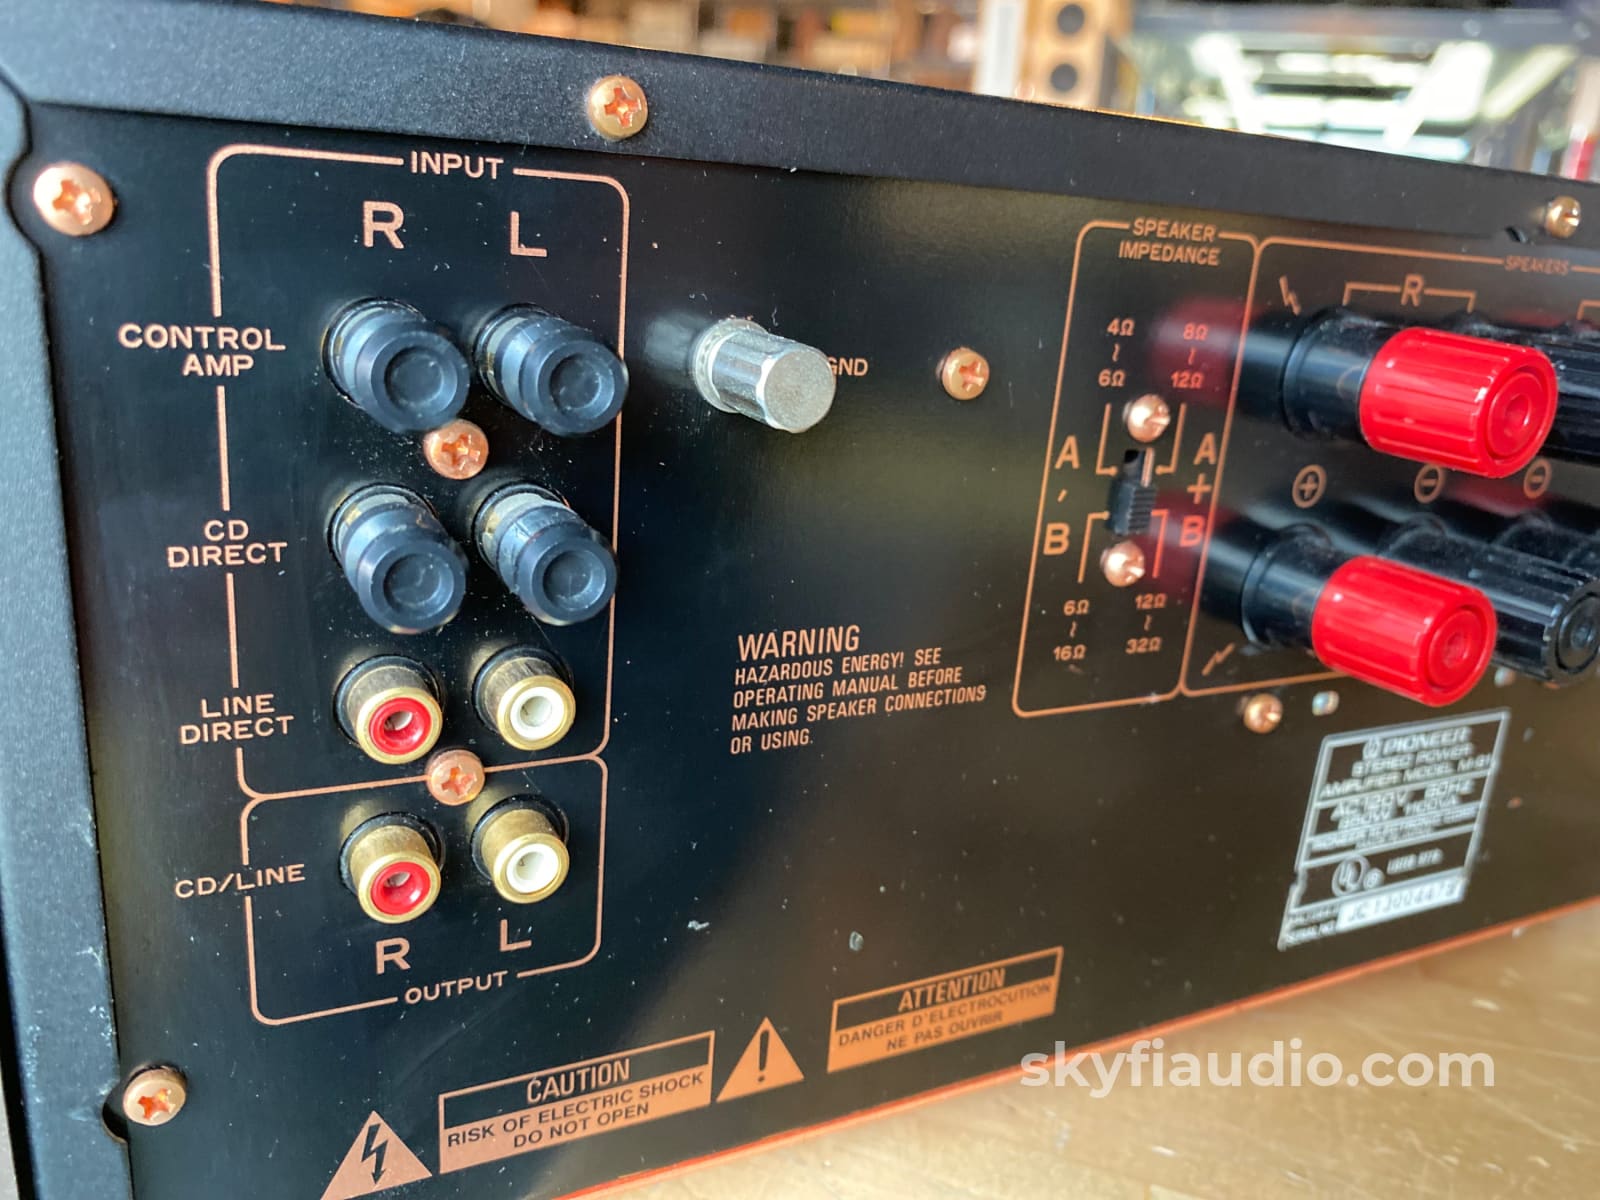 Pioneer Elite M-91 Vintage Solid State Amplifier - Gorgeous Amplifier